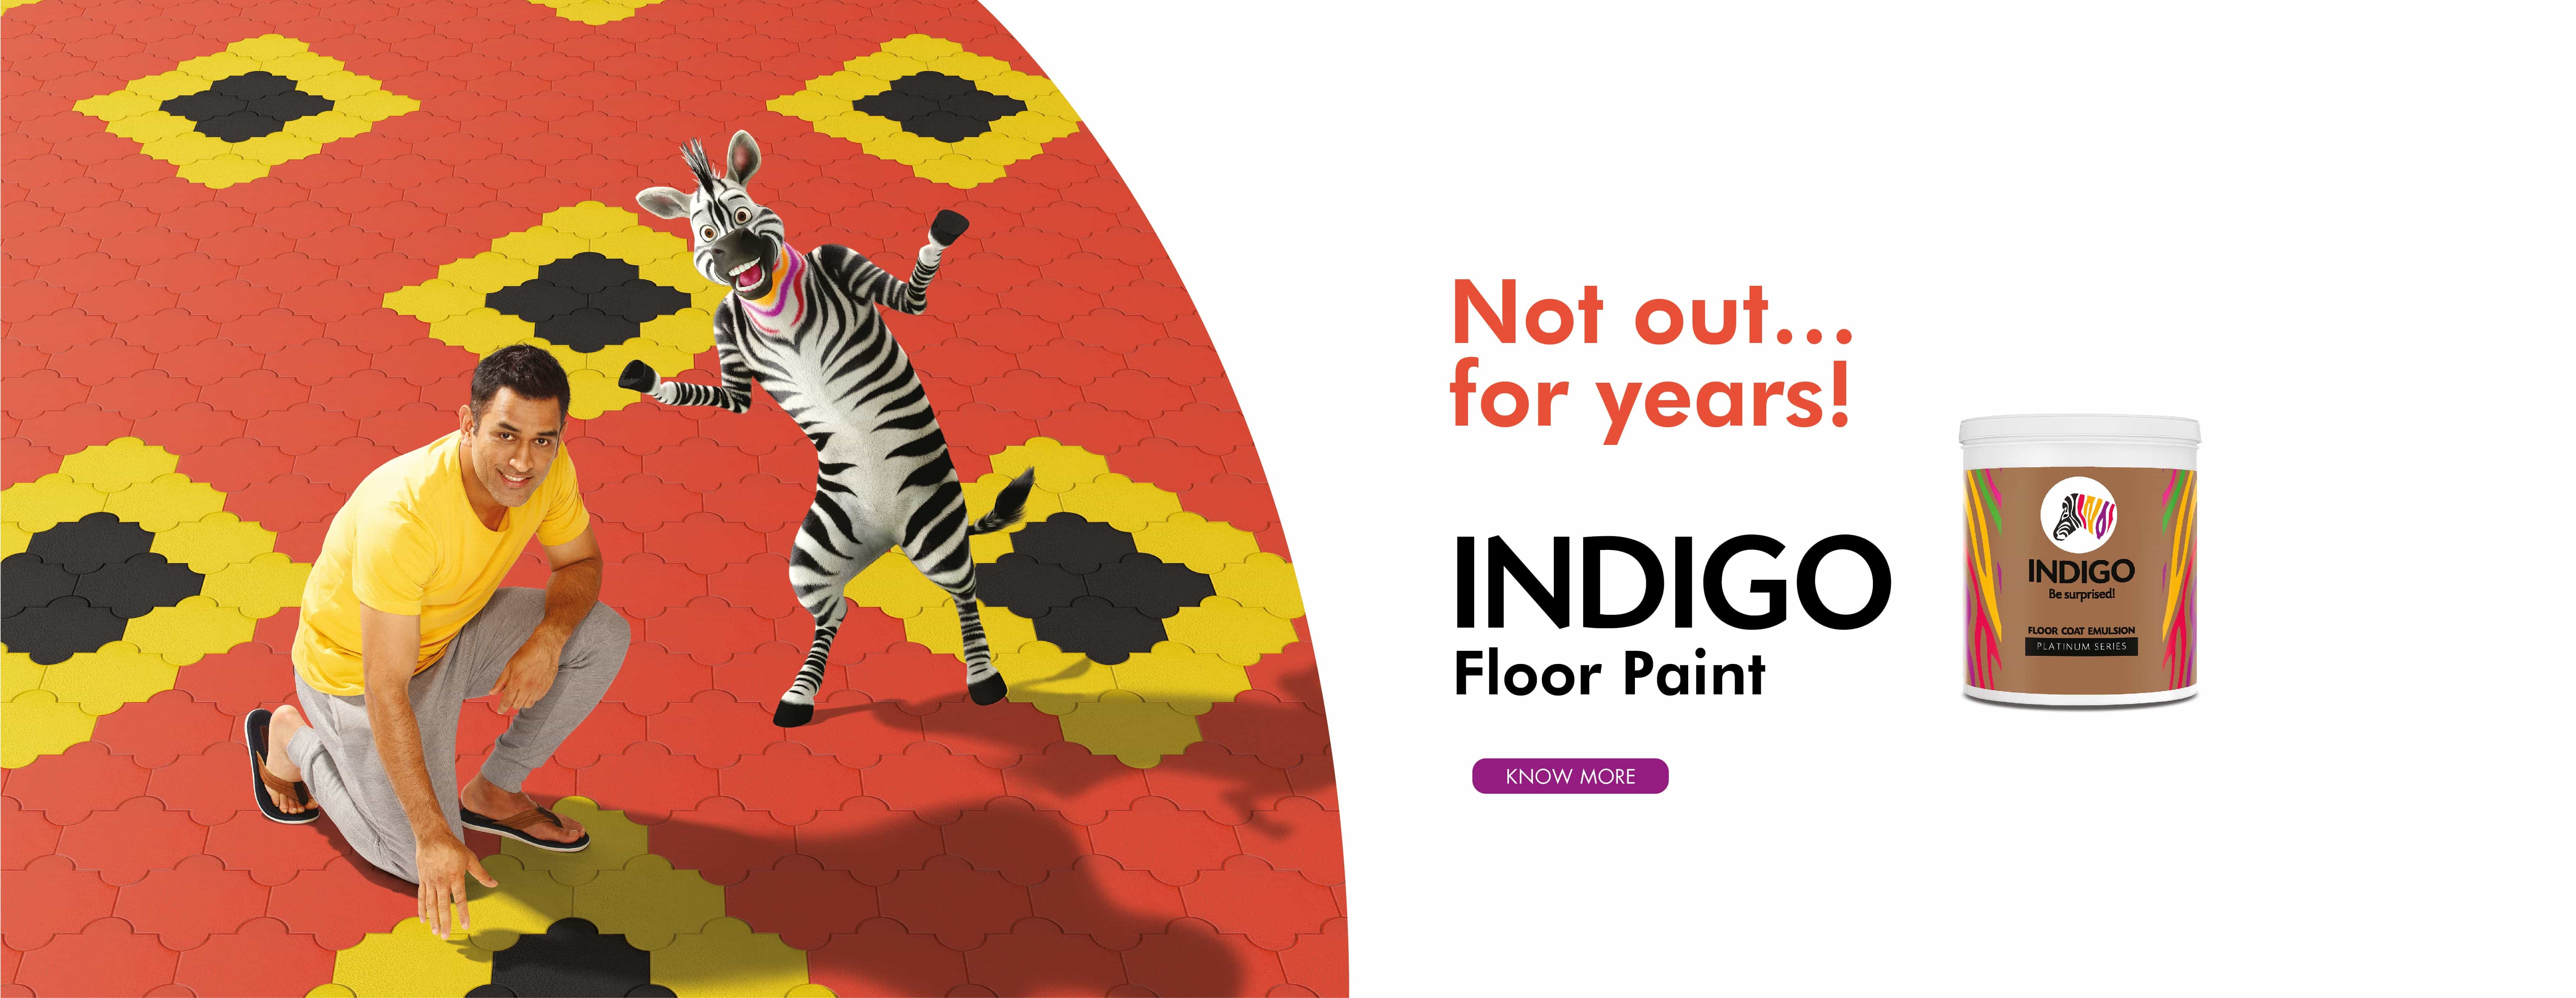 indigo-floor-paint-banner-web.jpg